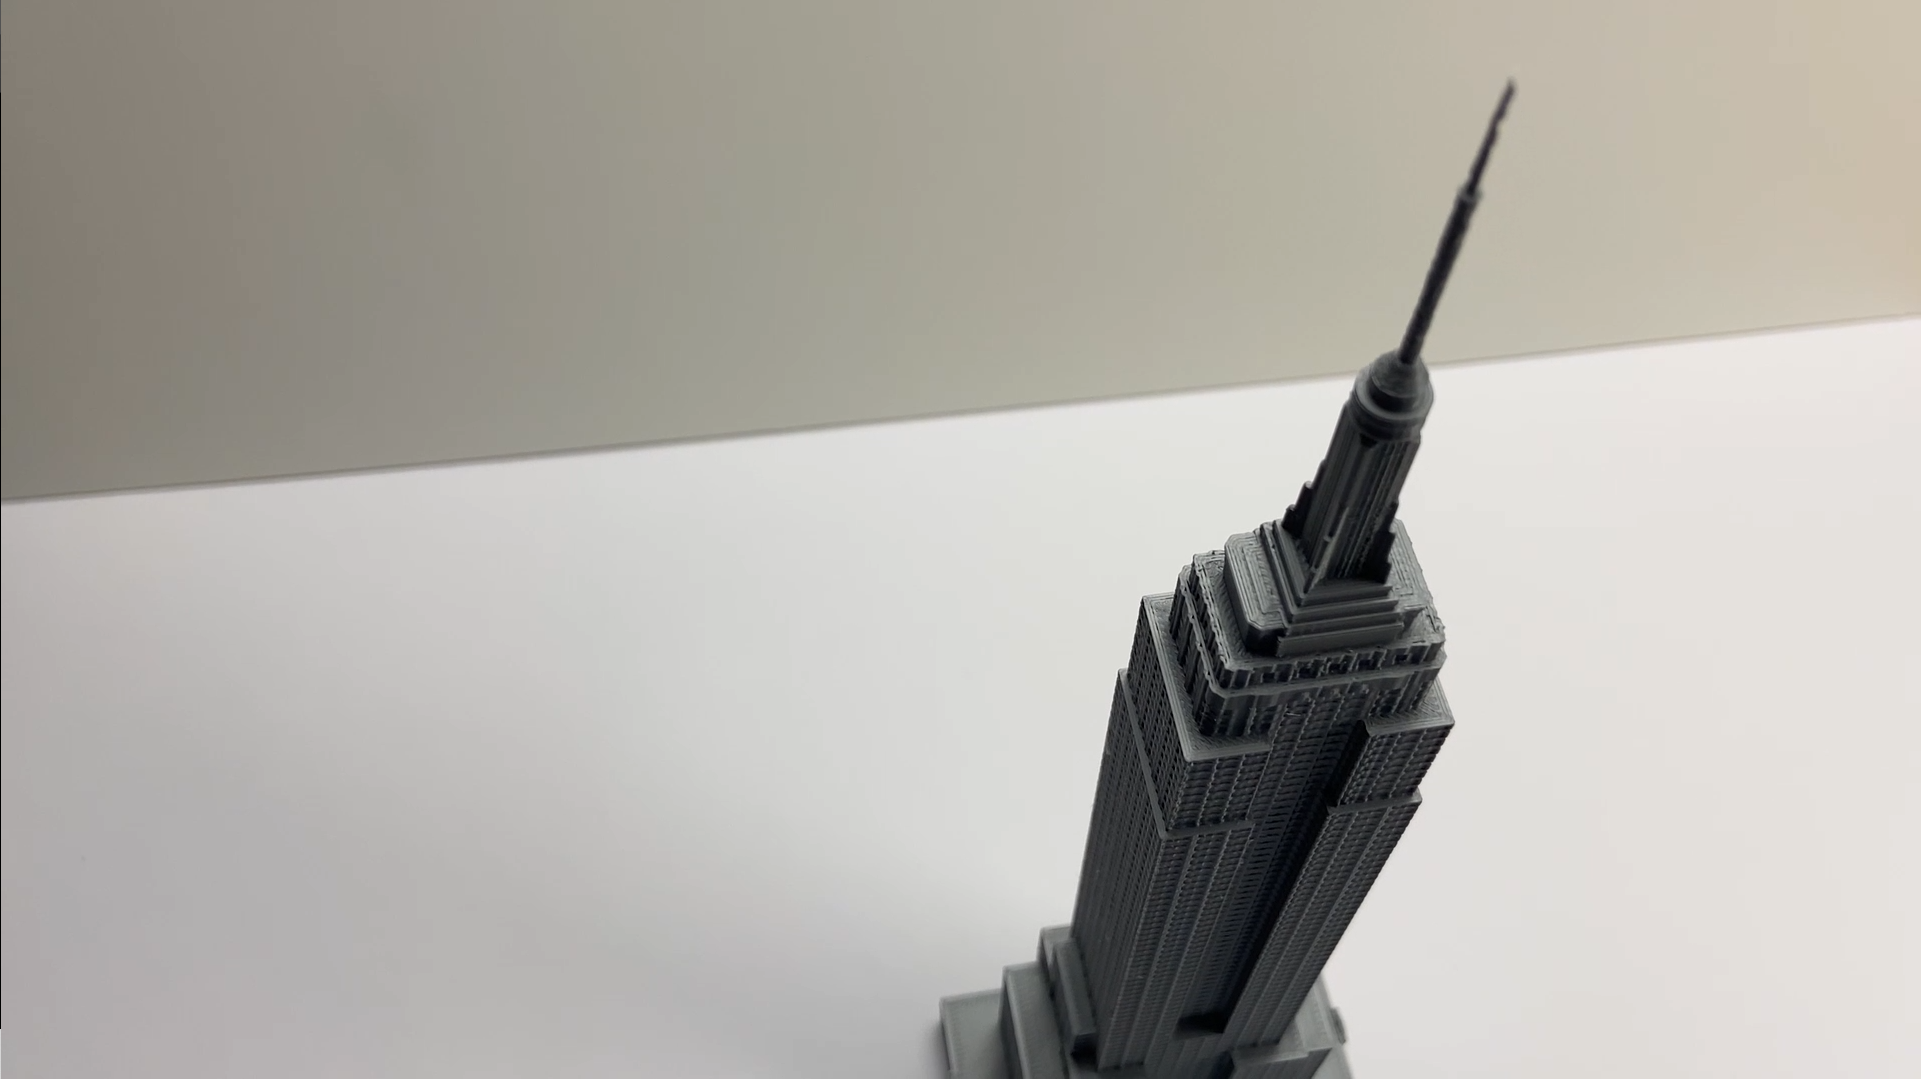 Empire State Building (SKYSCRAPER) - detailed model